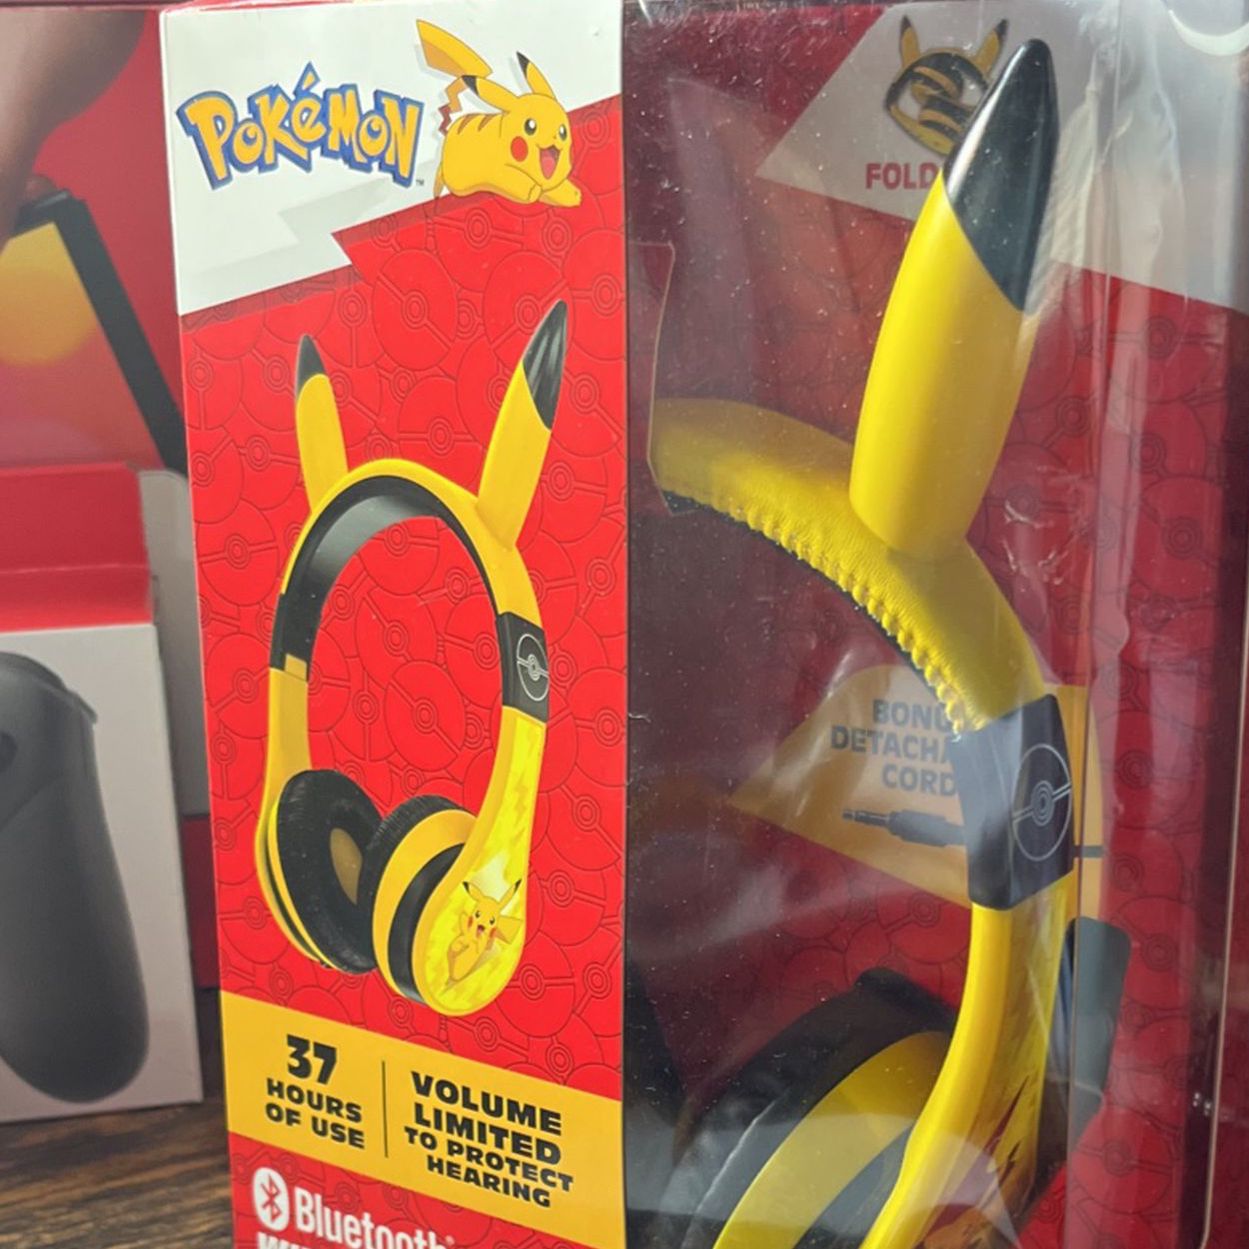 Pokémon Pikachu Bluetooth Wireless Headphones With Additional Cord